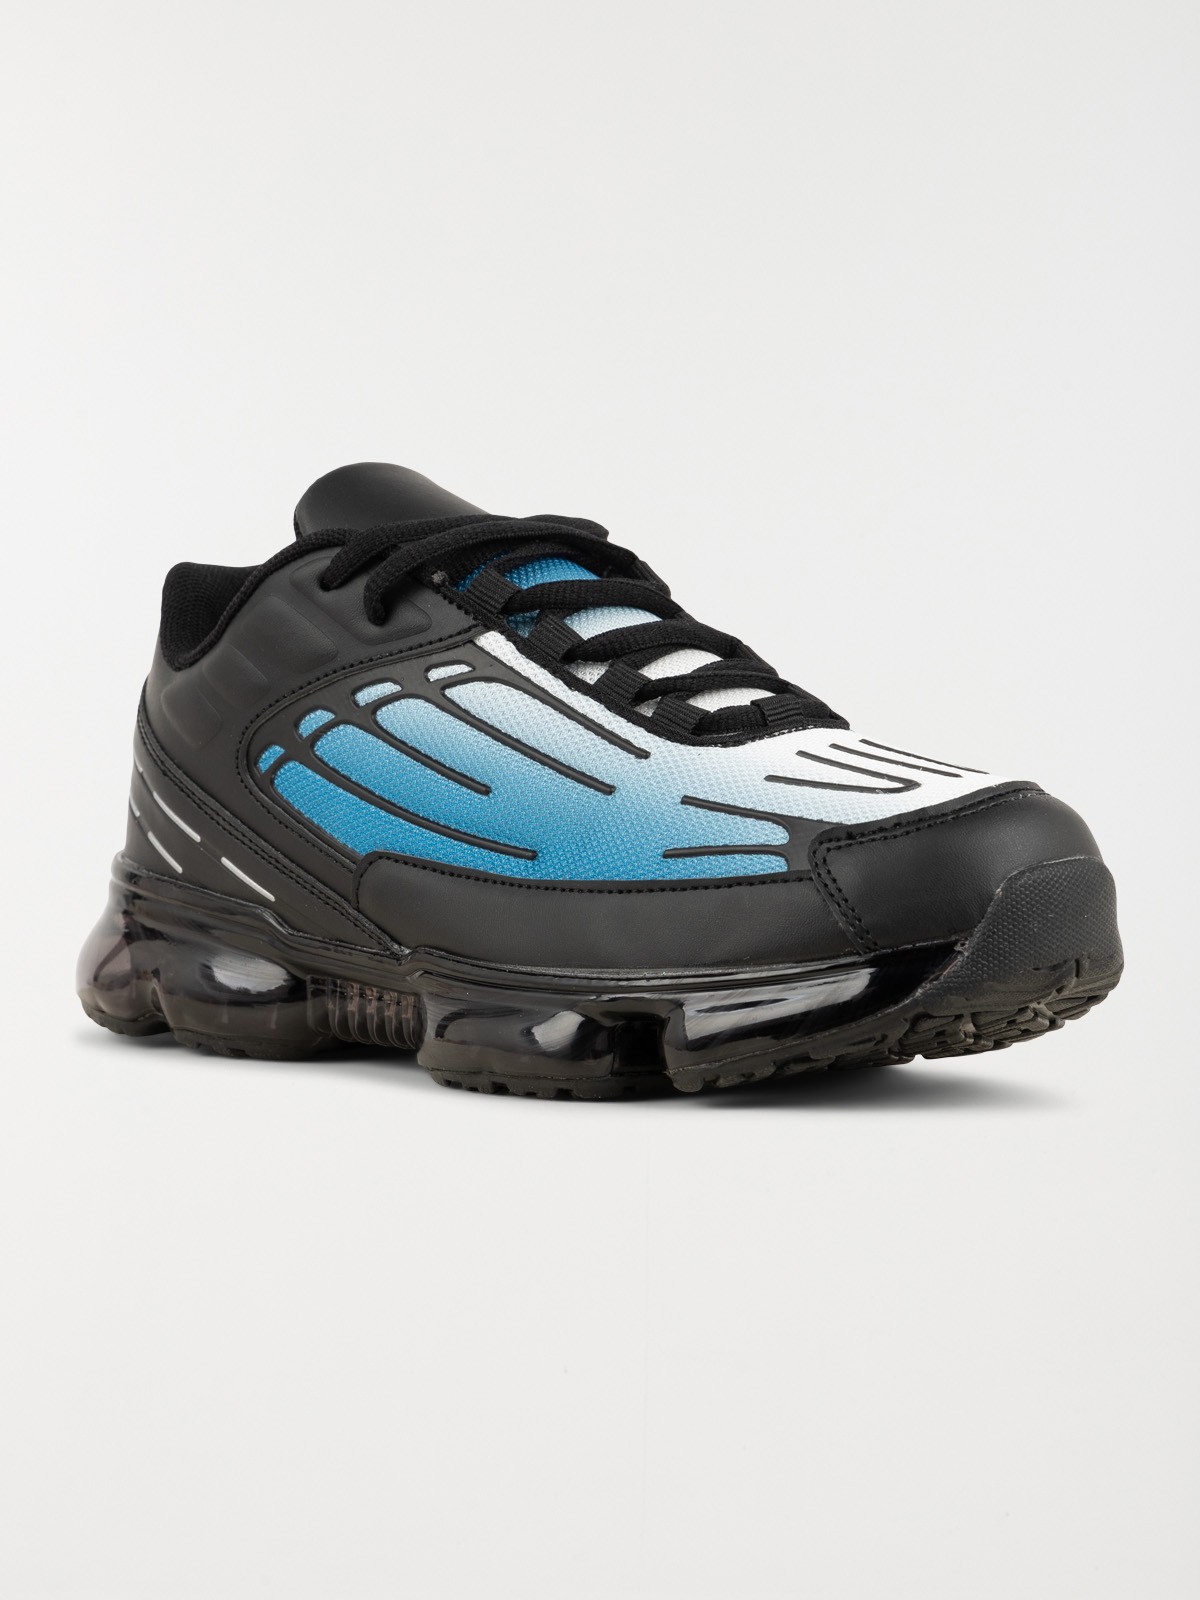 Chaussures sport homme gris (40-46) - DistriCenter